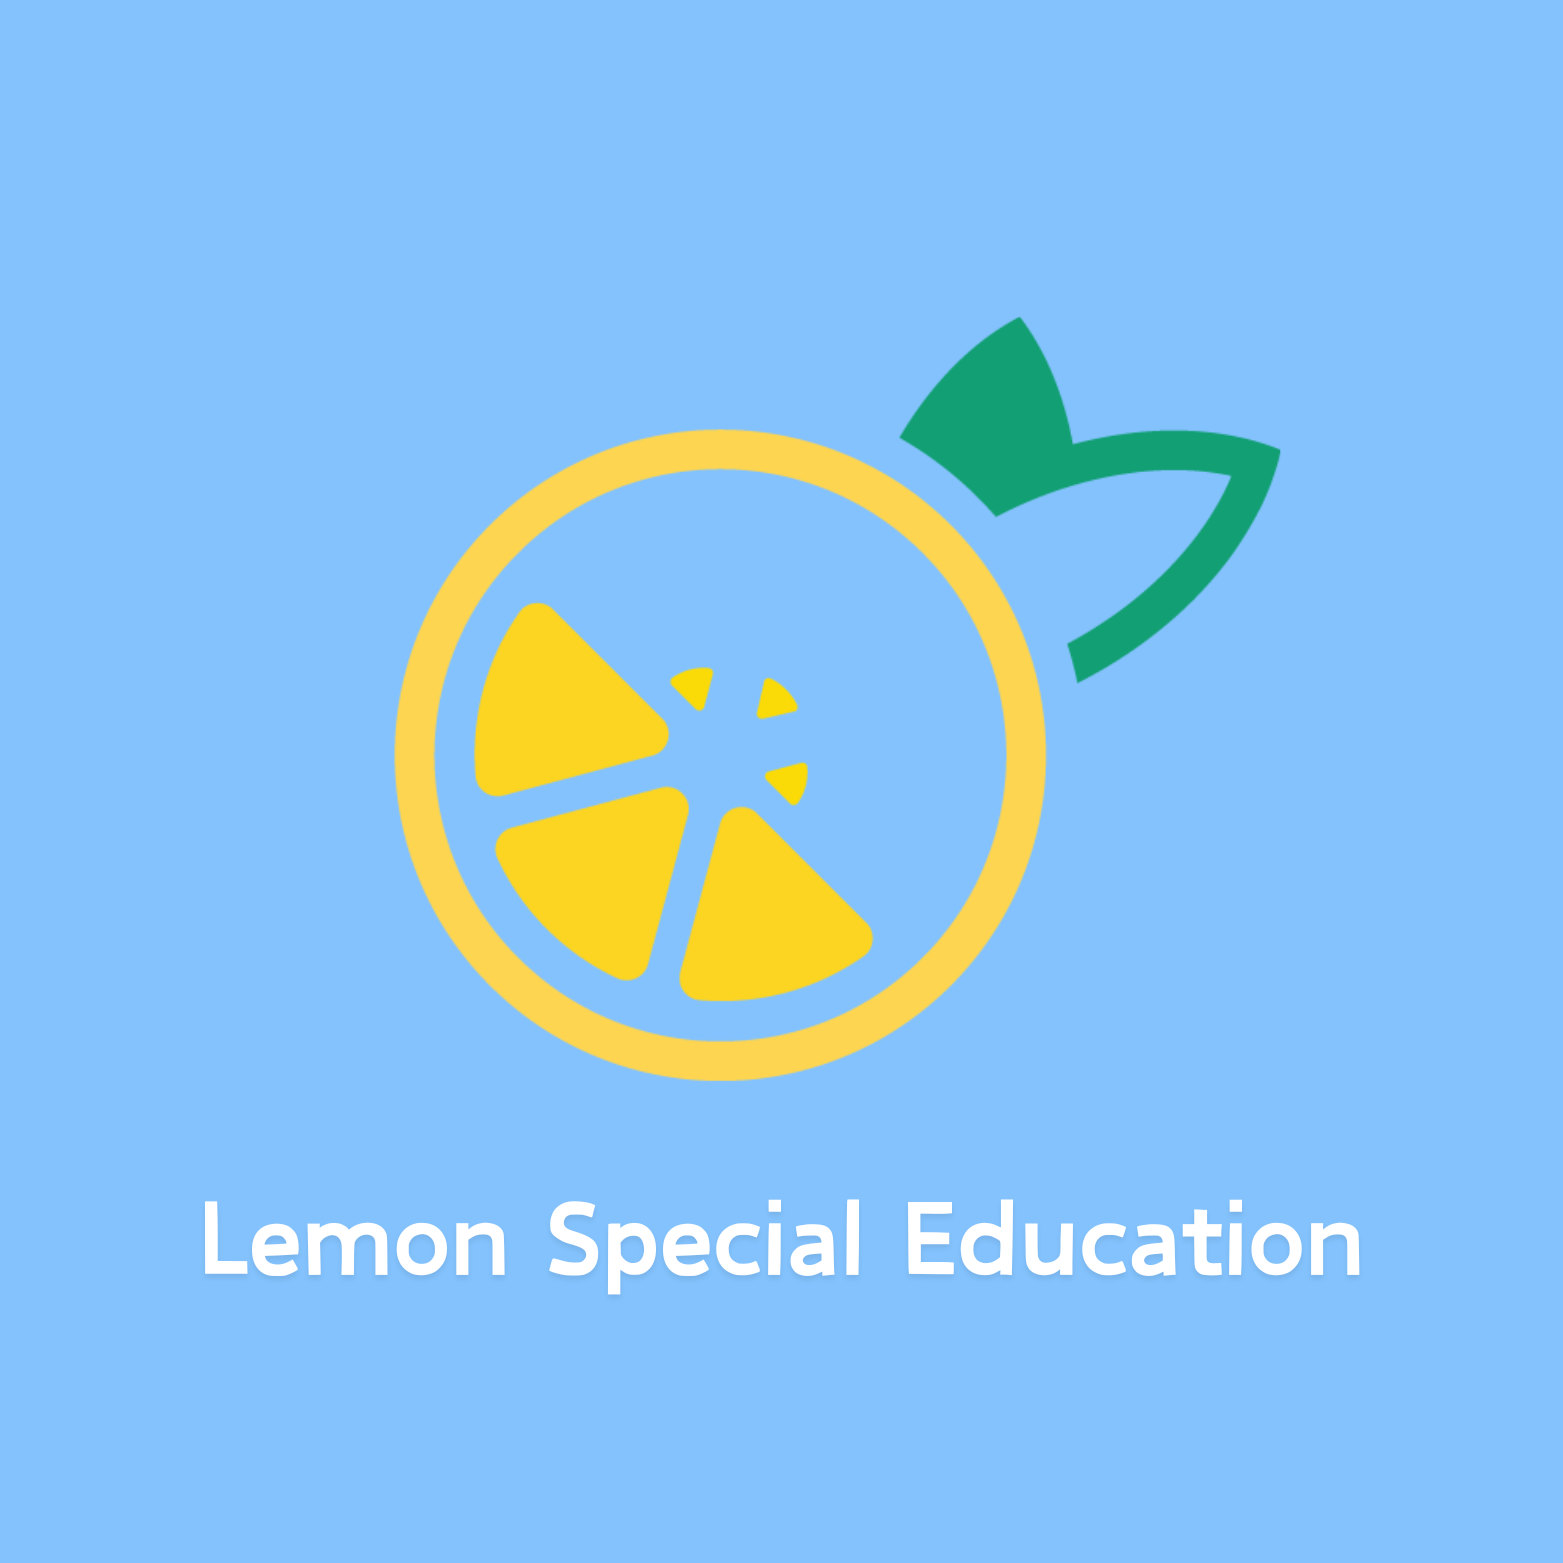 Lemon Special Education